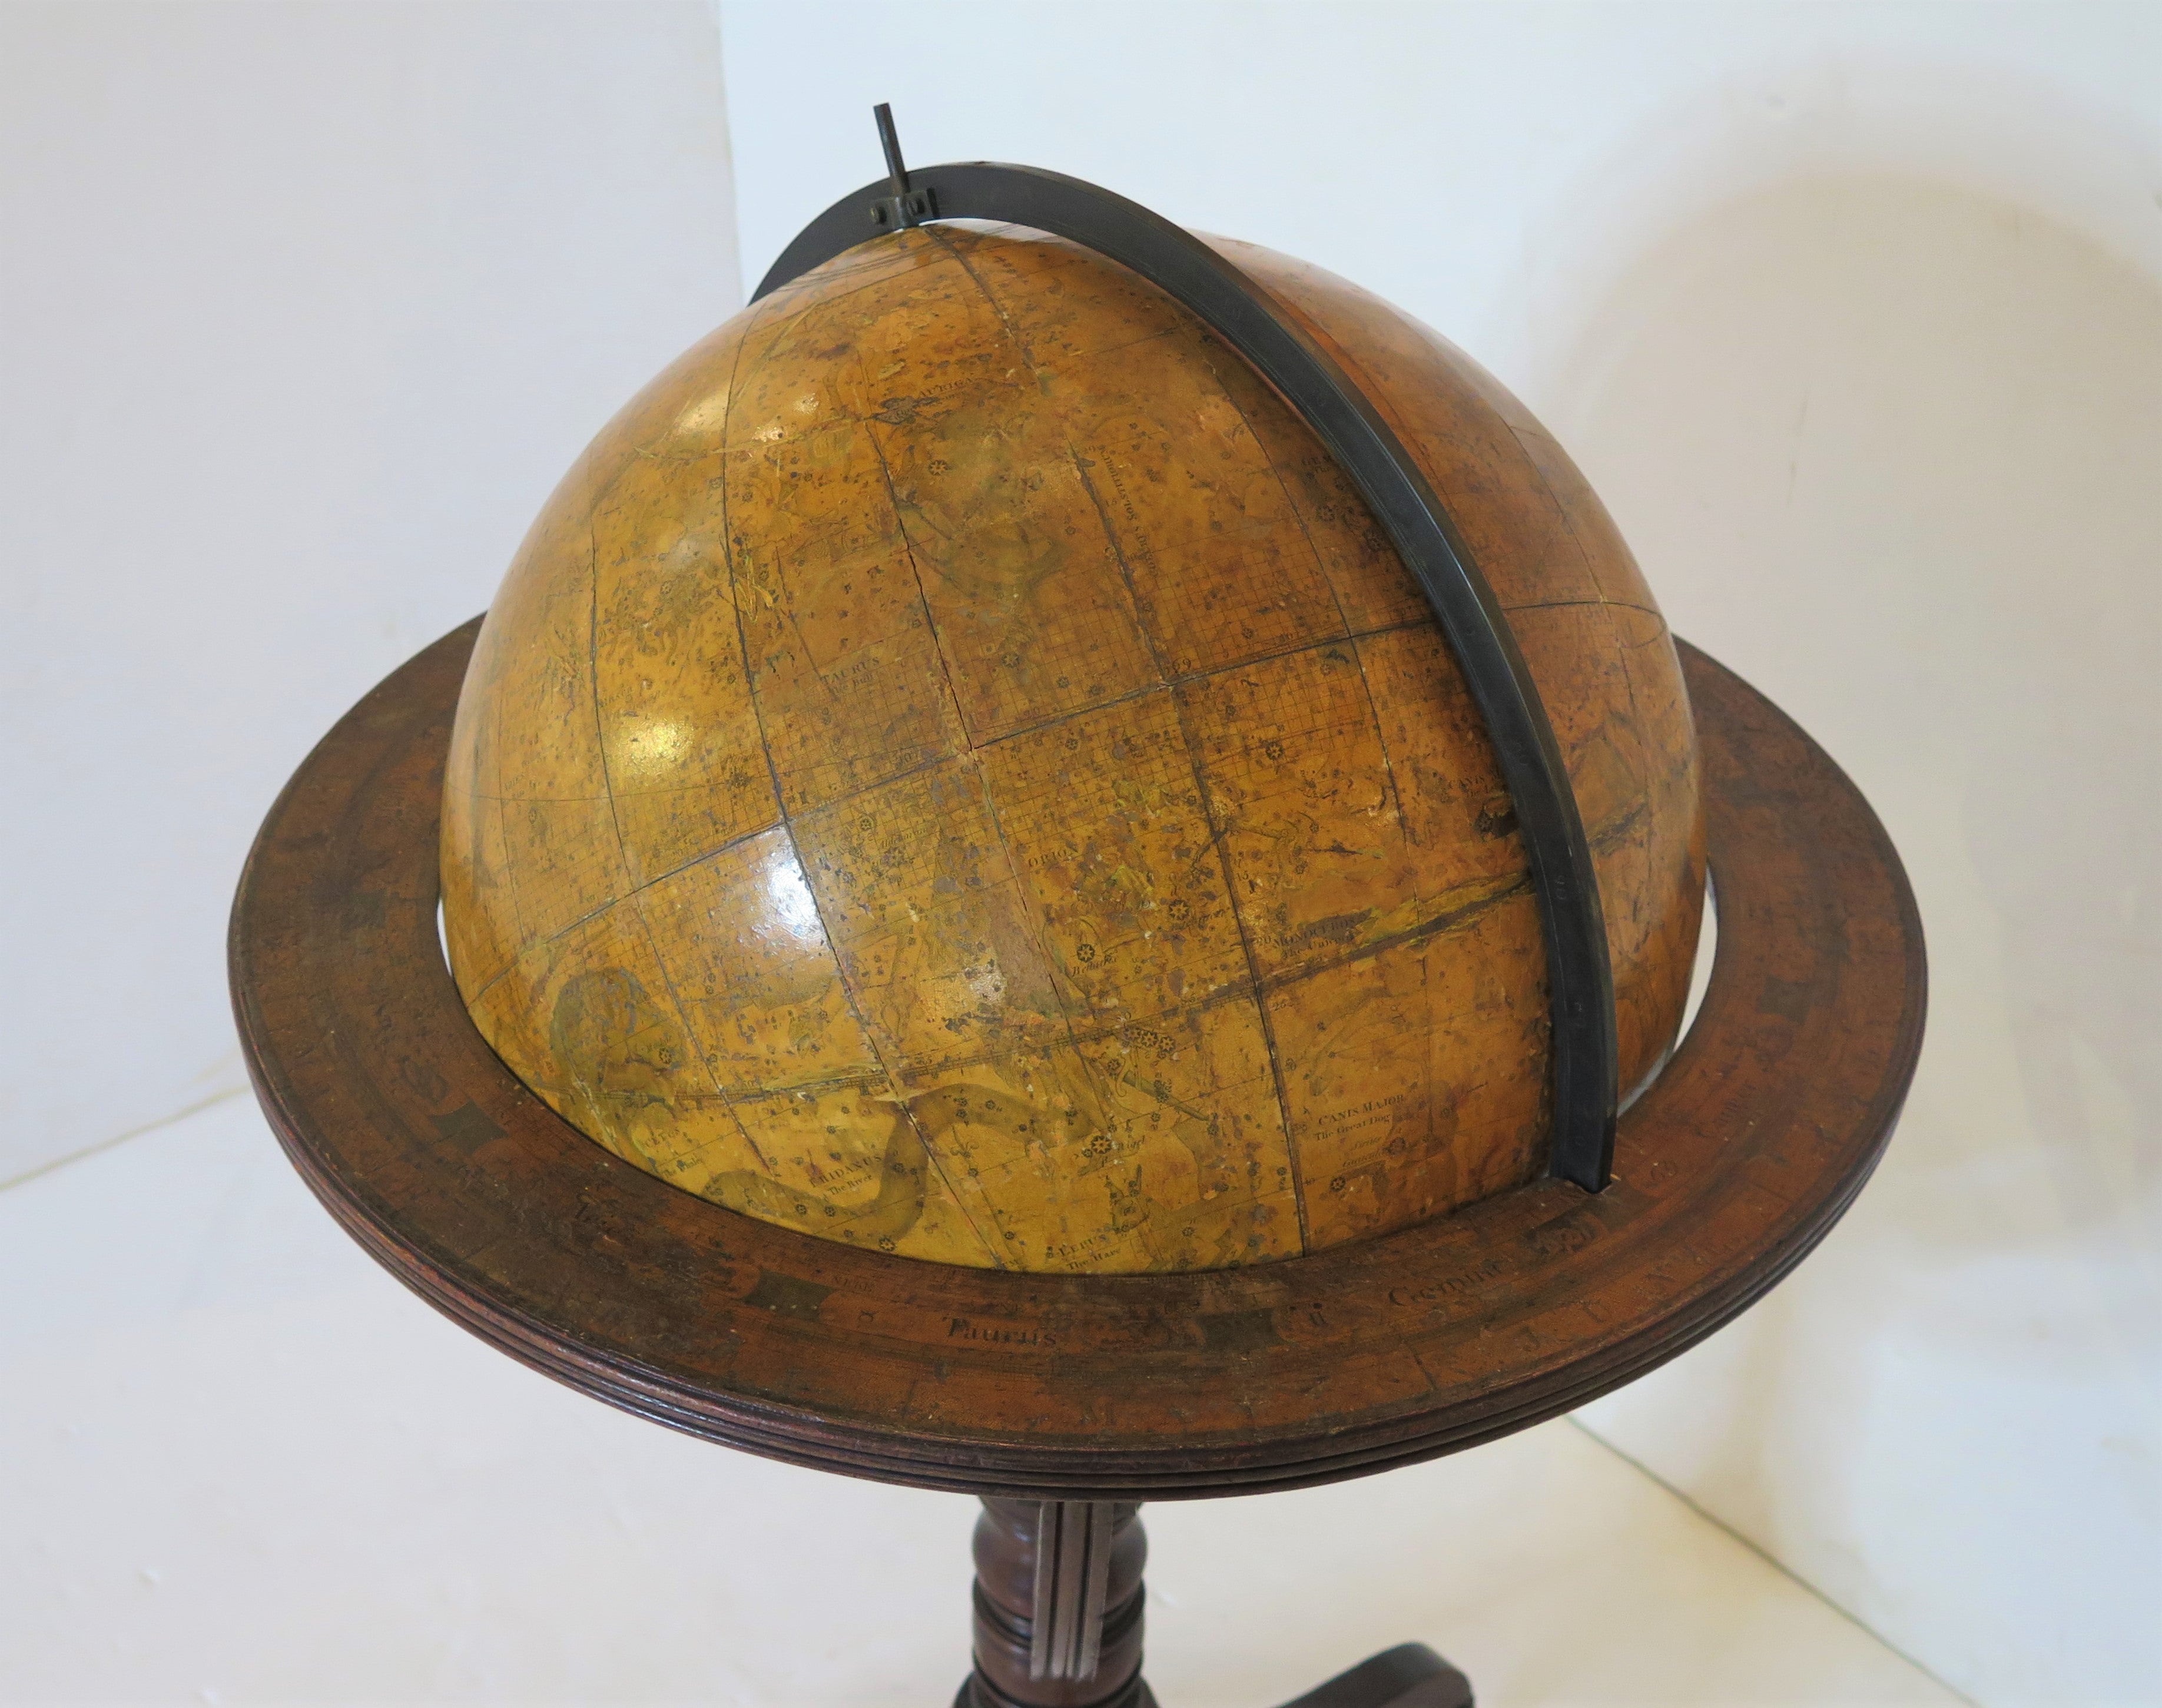 George III Eighteen Inch Celestial Globe by W. and T.M. Bardin, 1800